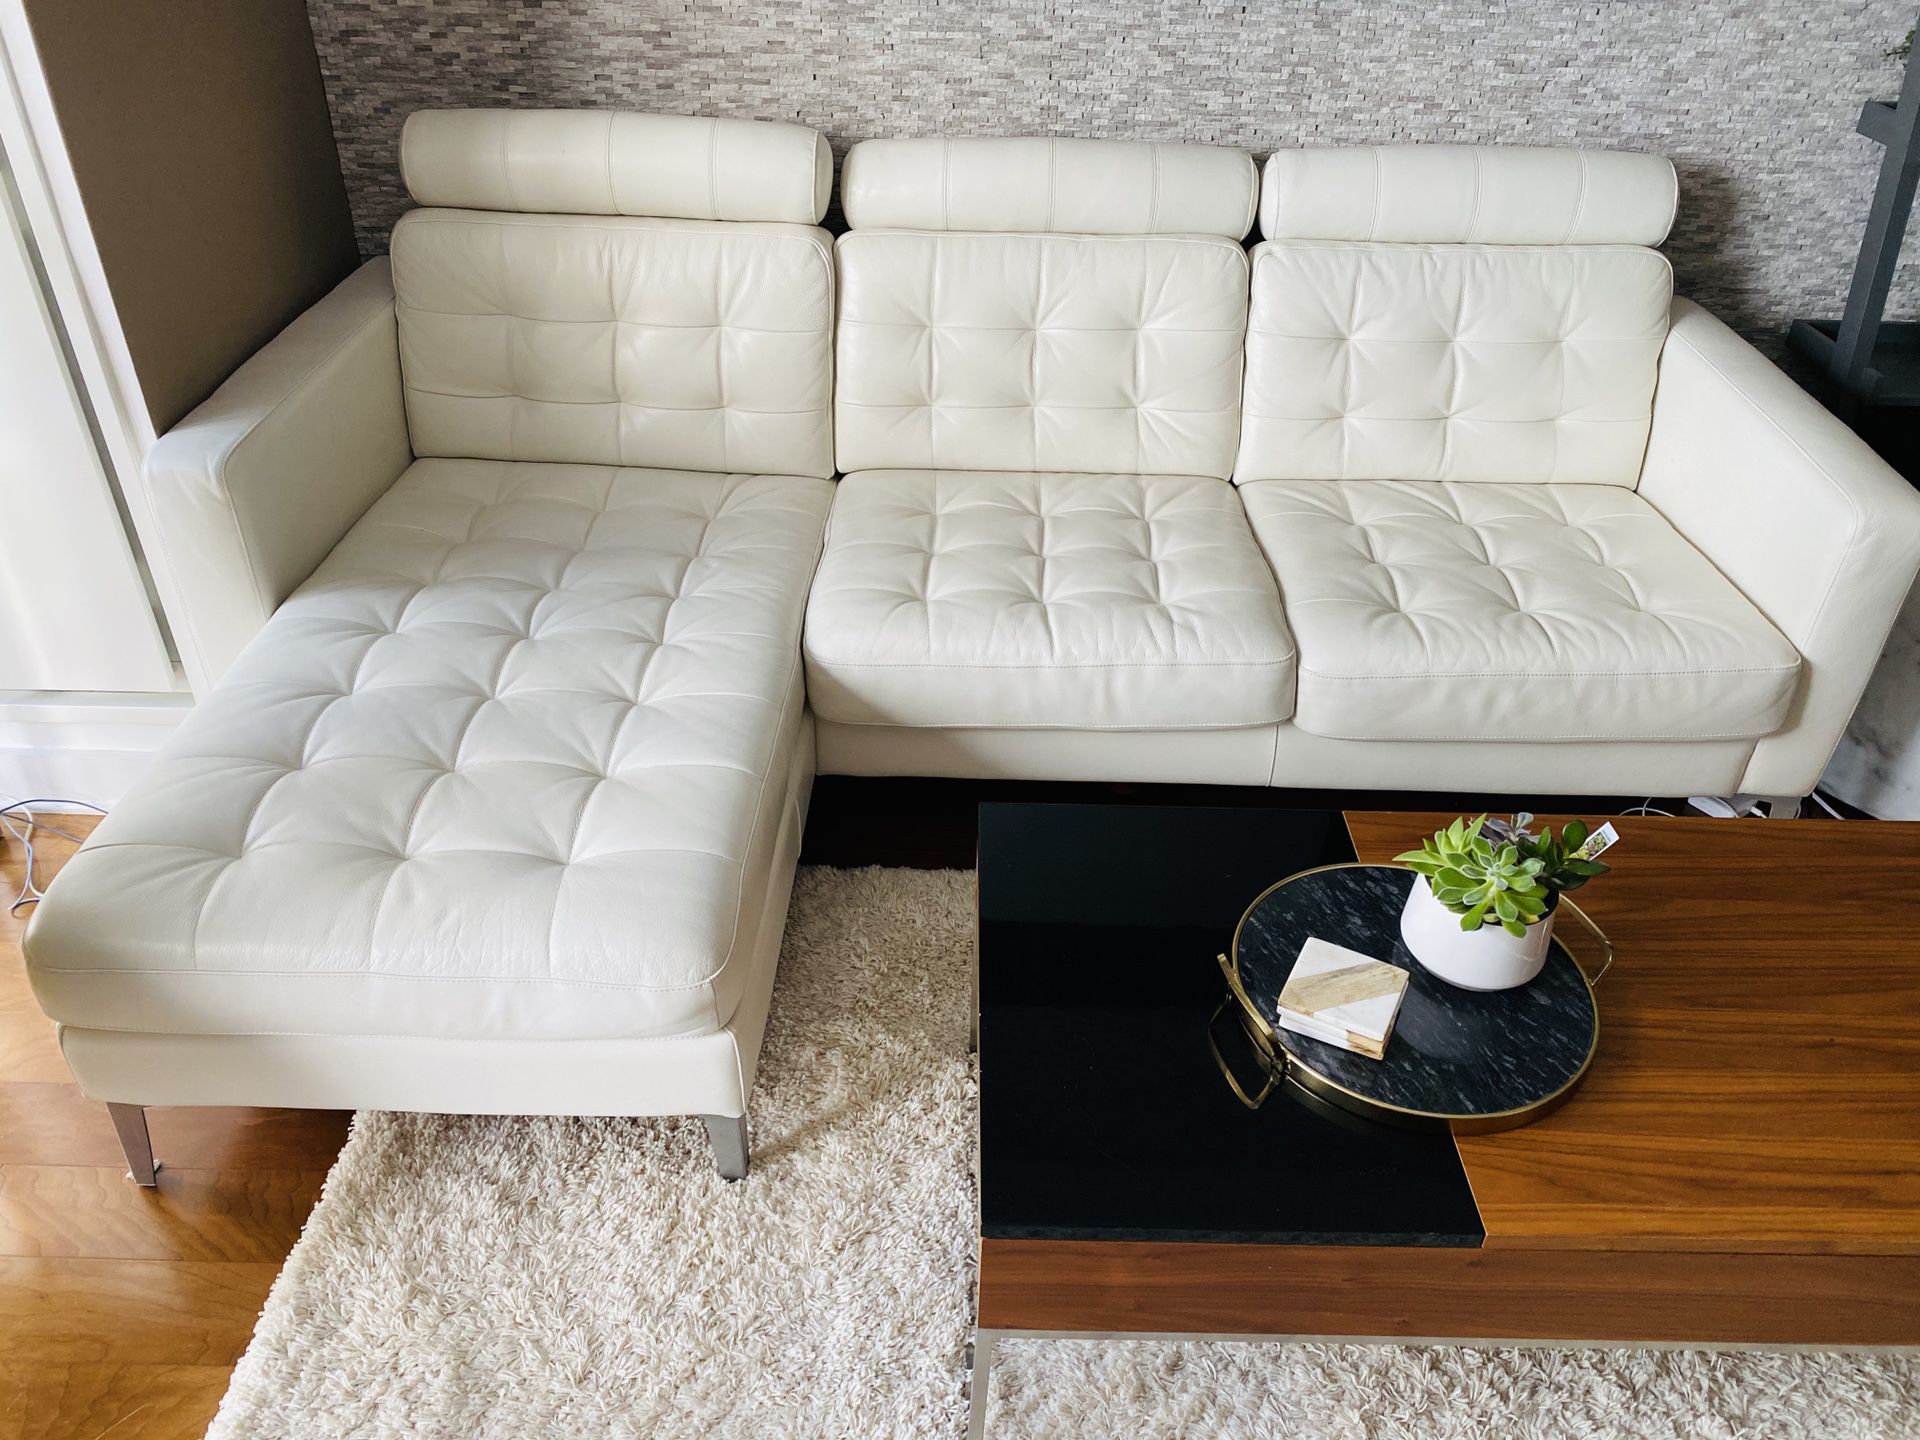 IKEA Landroska Leather Couch